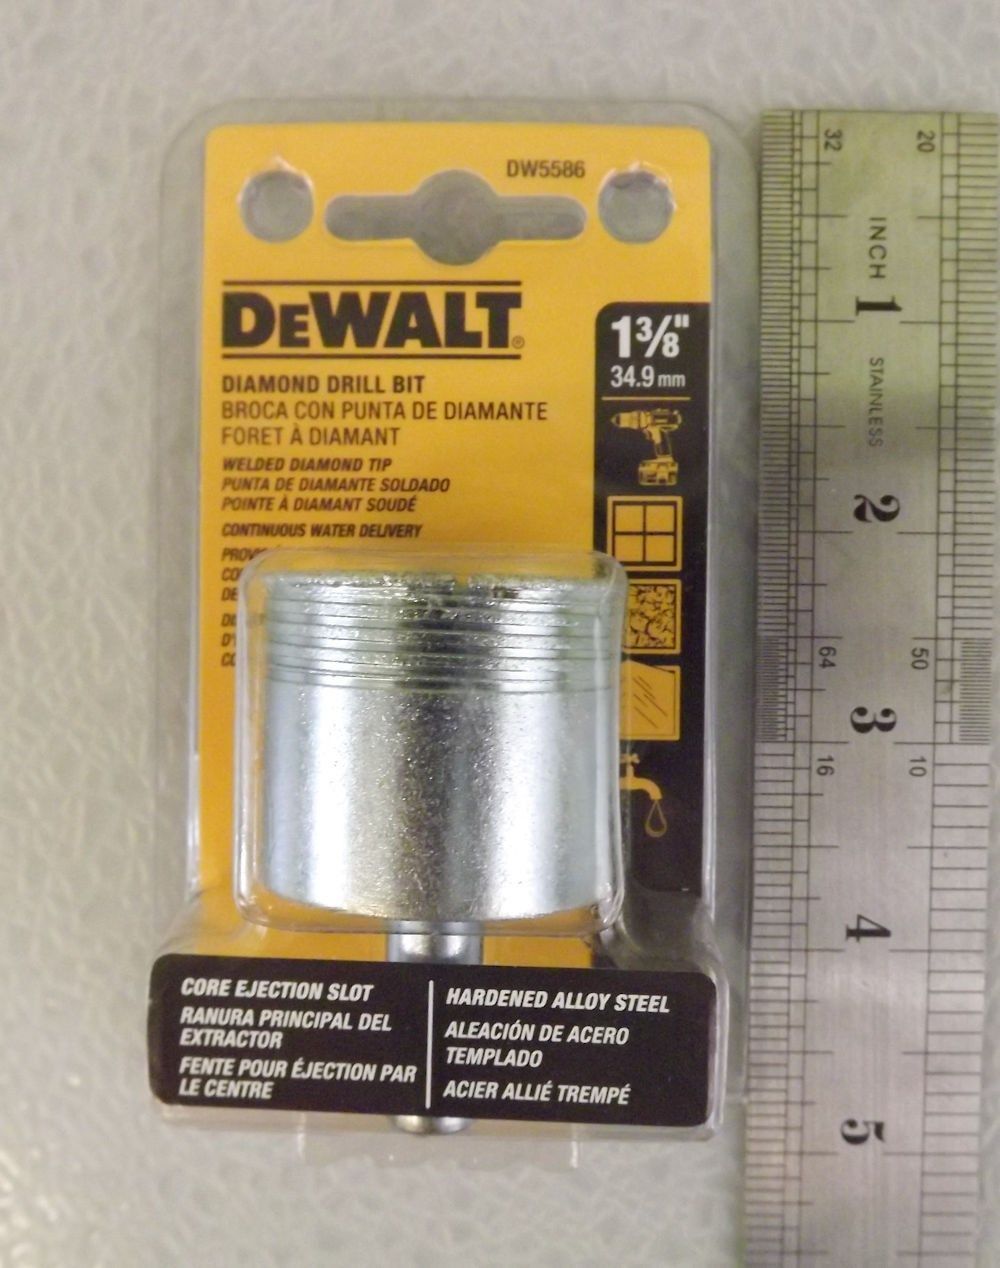 DeWalt DW5586 1-3/8 Diamond Drill Bit Made in the UK